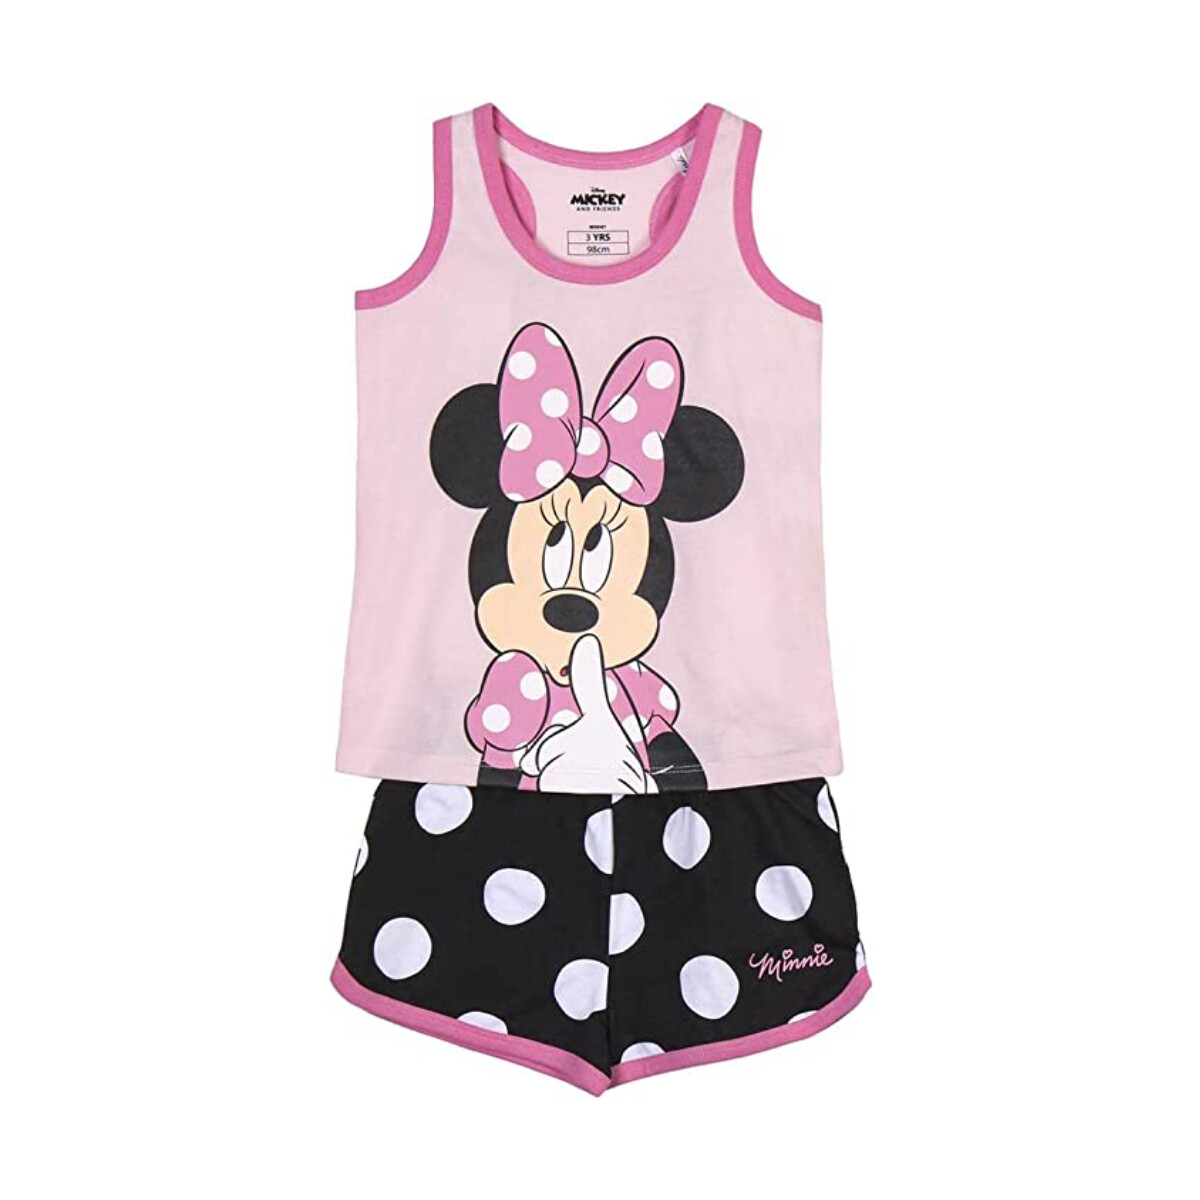 Textil Rapariga Pijamas / Camisas de dormir Disney 2200009235 Rosa